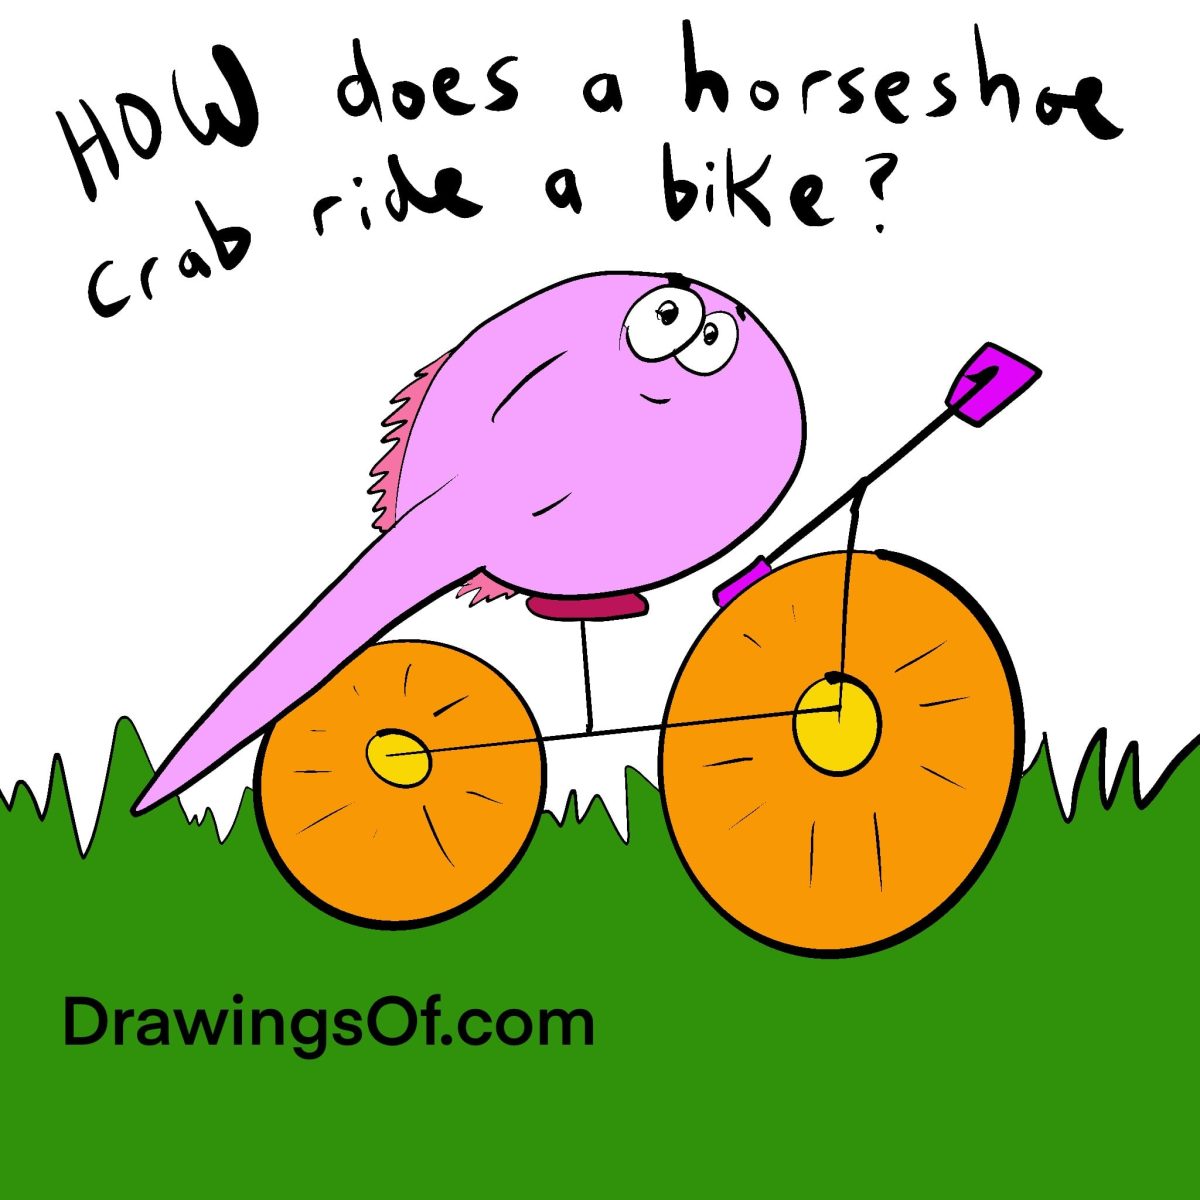 Horseshoe crab bike dream cartoon